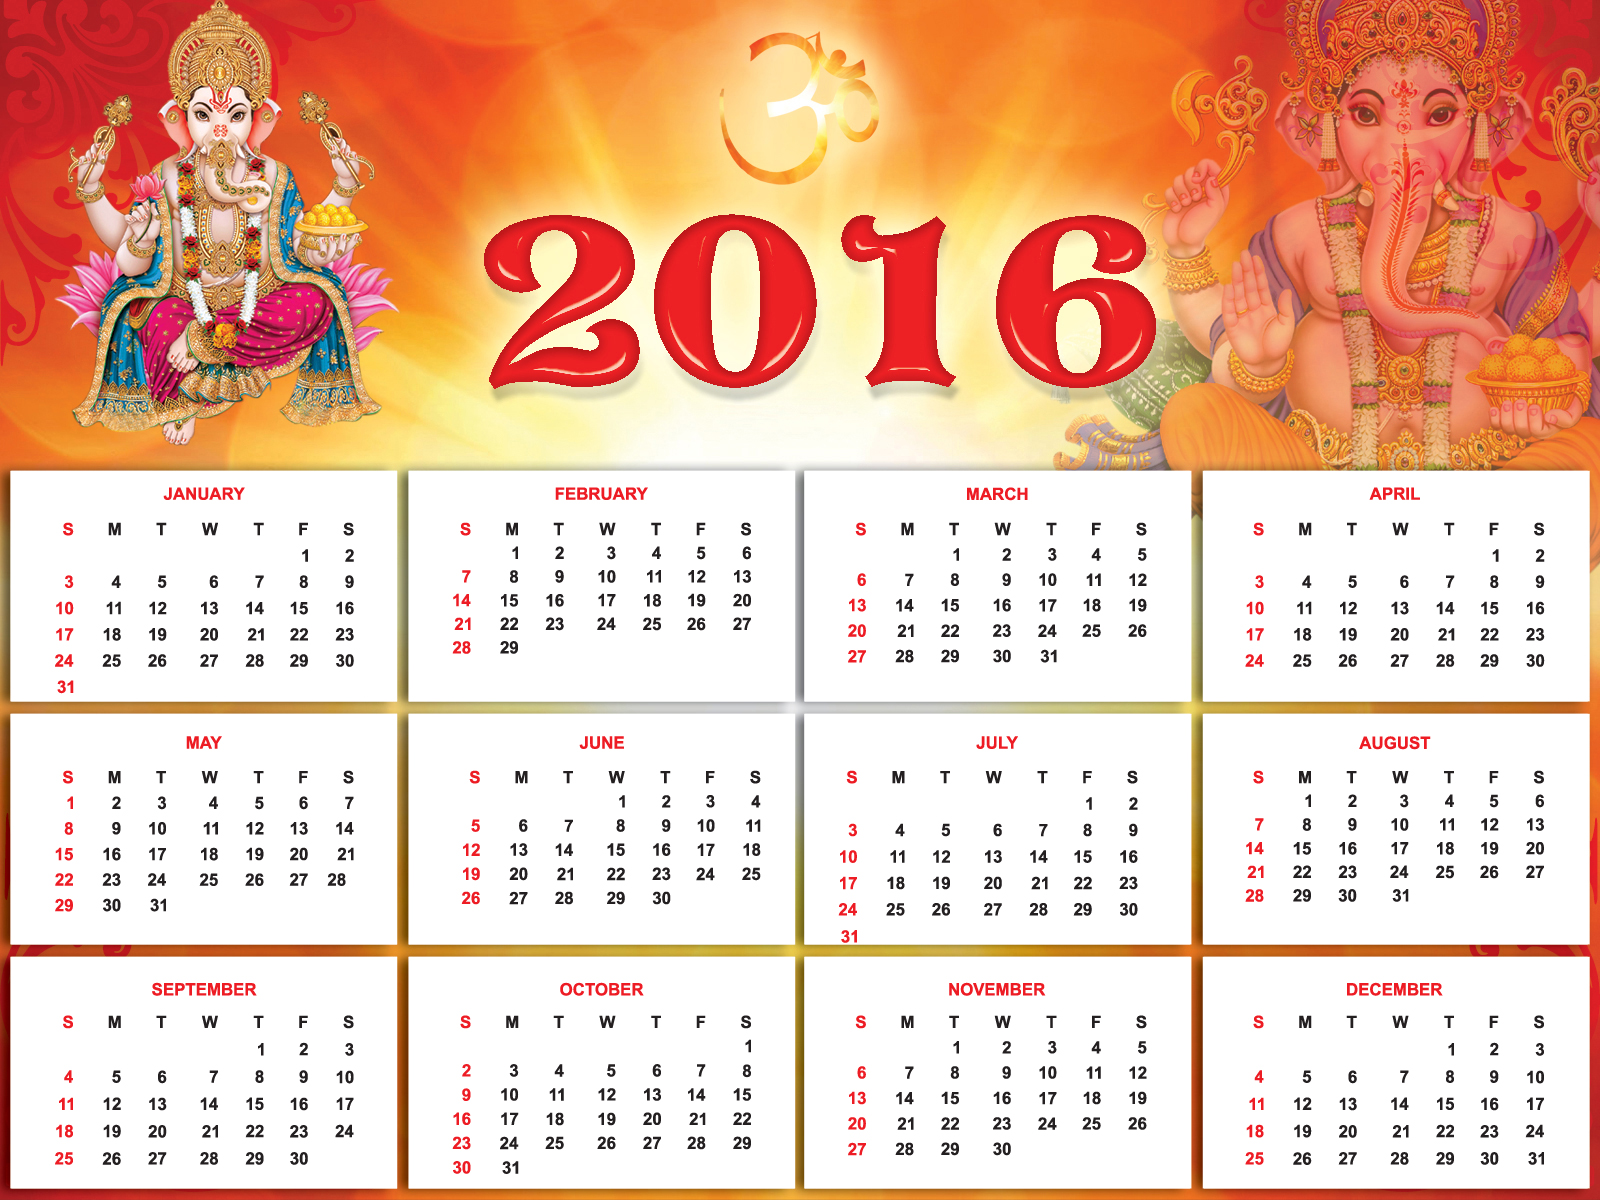 Calendar 2016 with God Ganesha Wallpaper   BhaktiSangrah